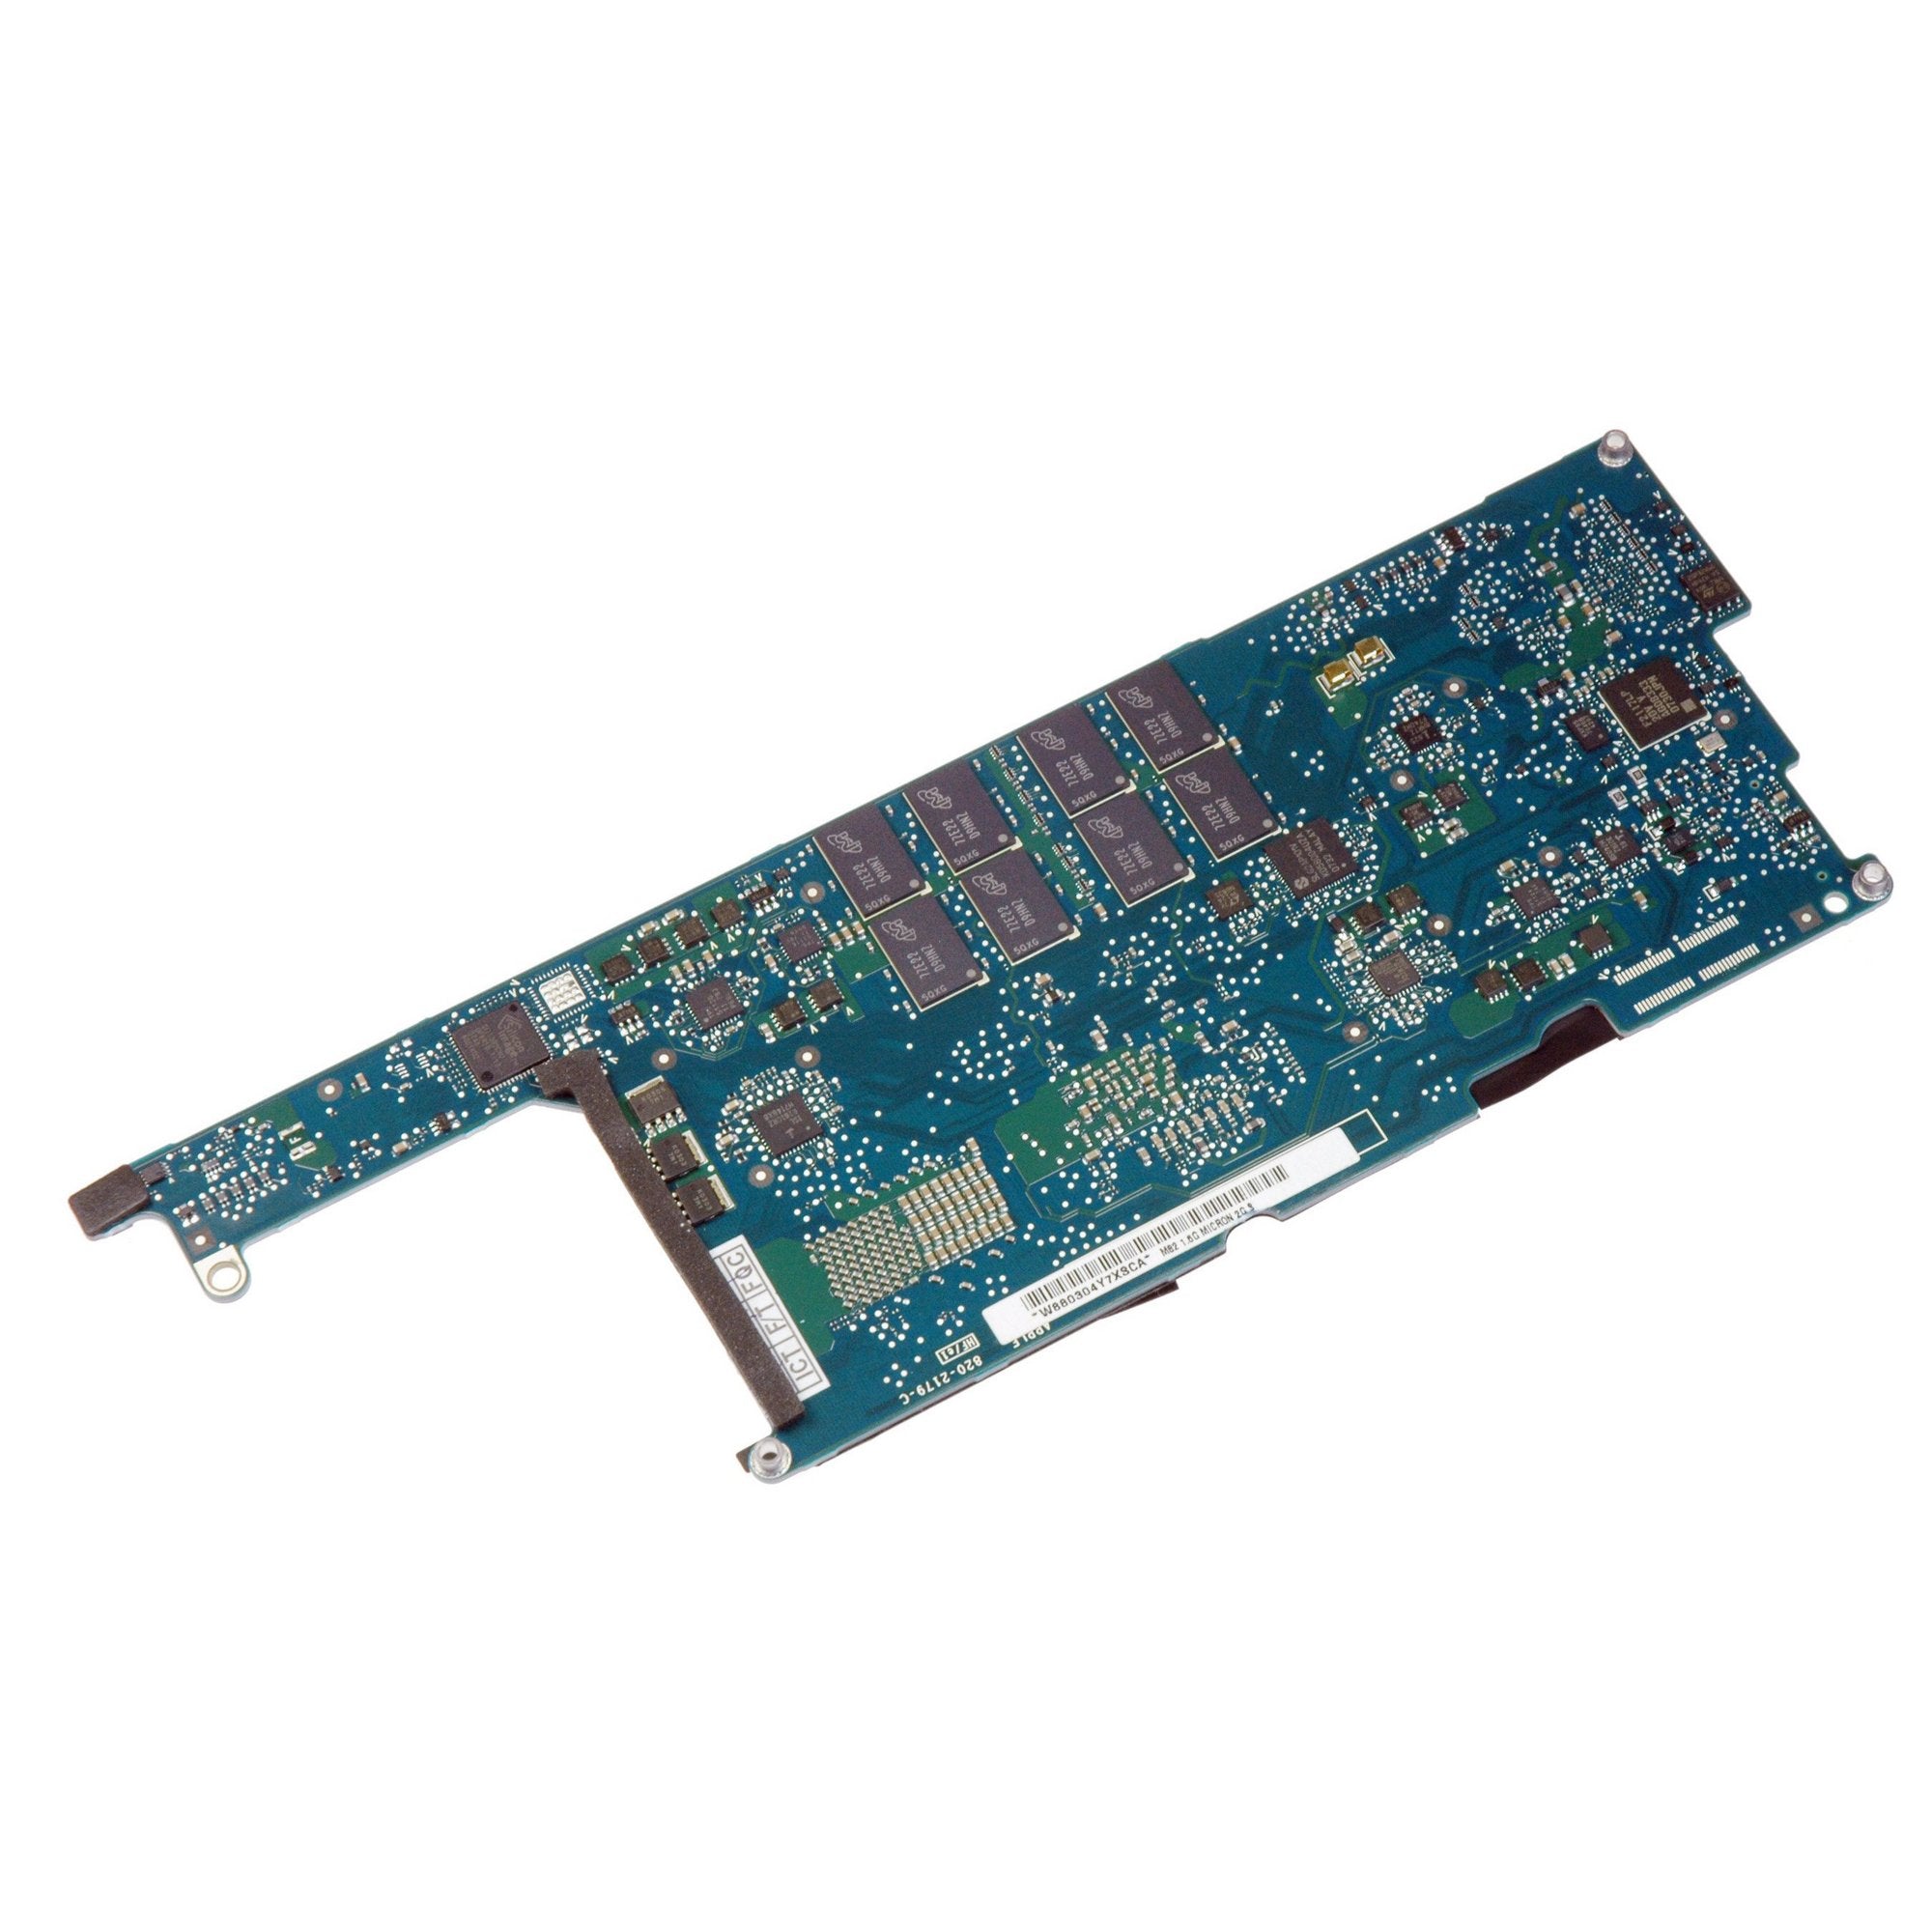 MacBook Air (Original) 1.6 GHz Logic Board Used